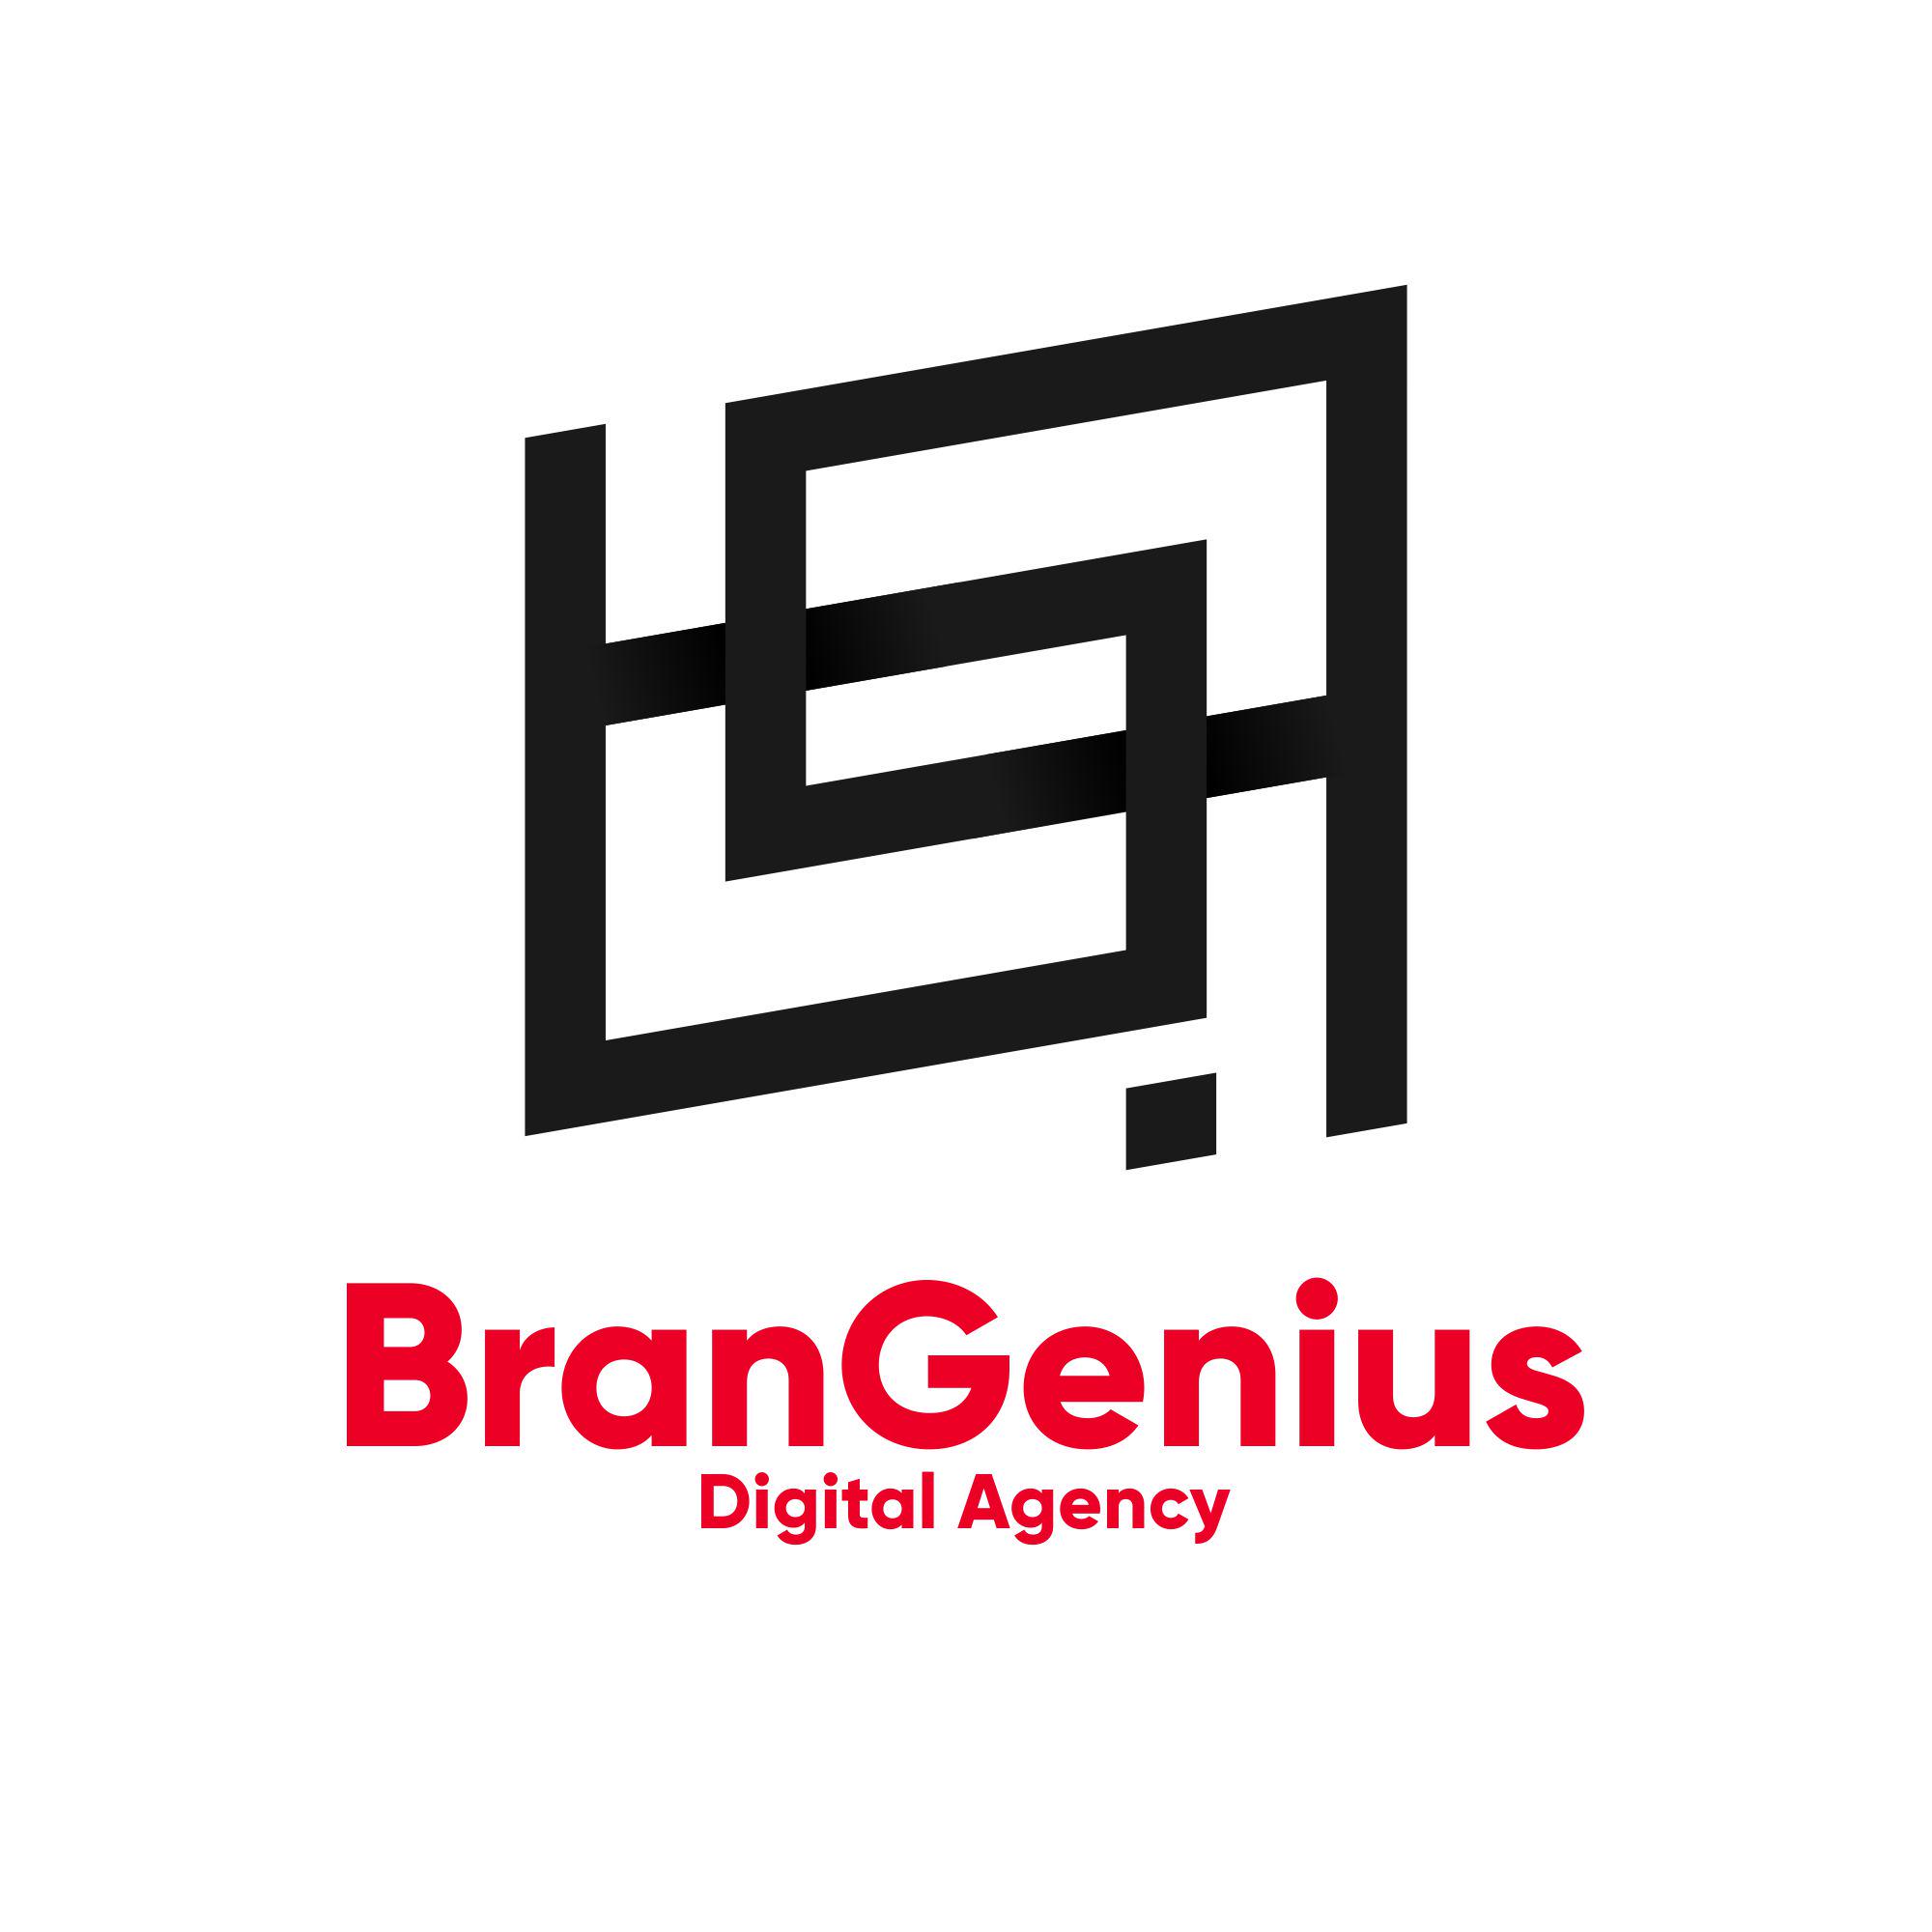 Brangenius Digital Agency profile on Qualified.One